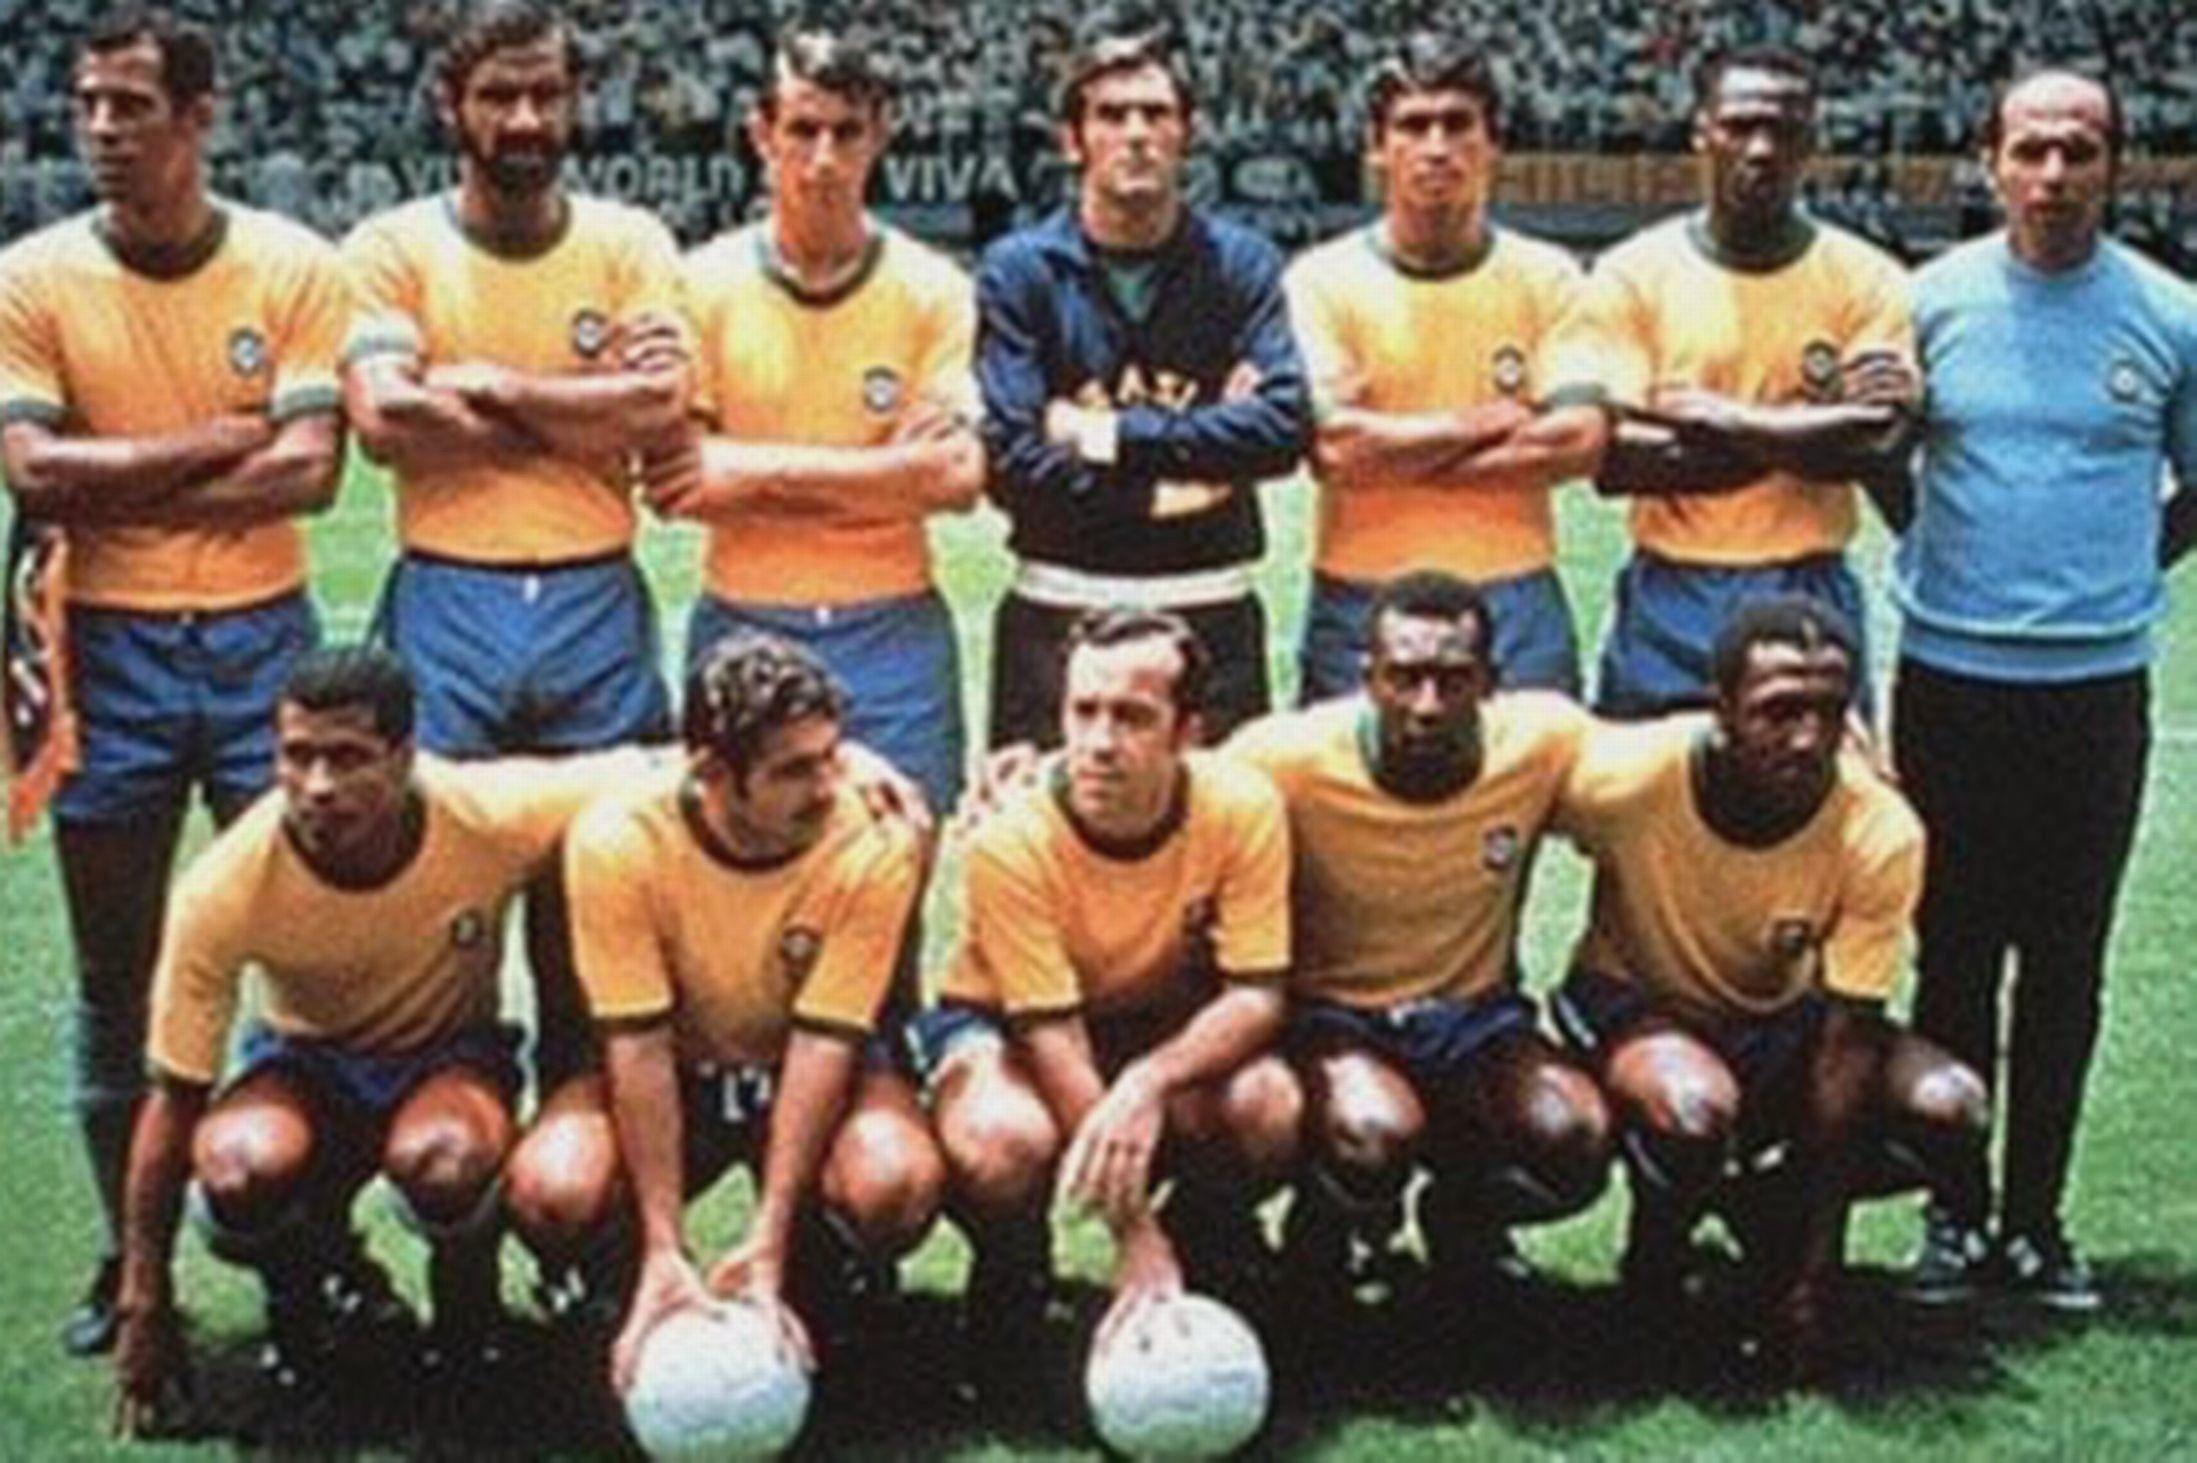 Brazil Football Team Wallpaper HD Download